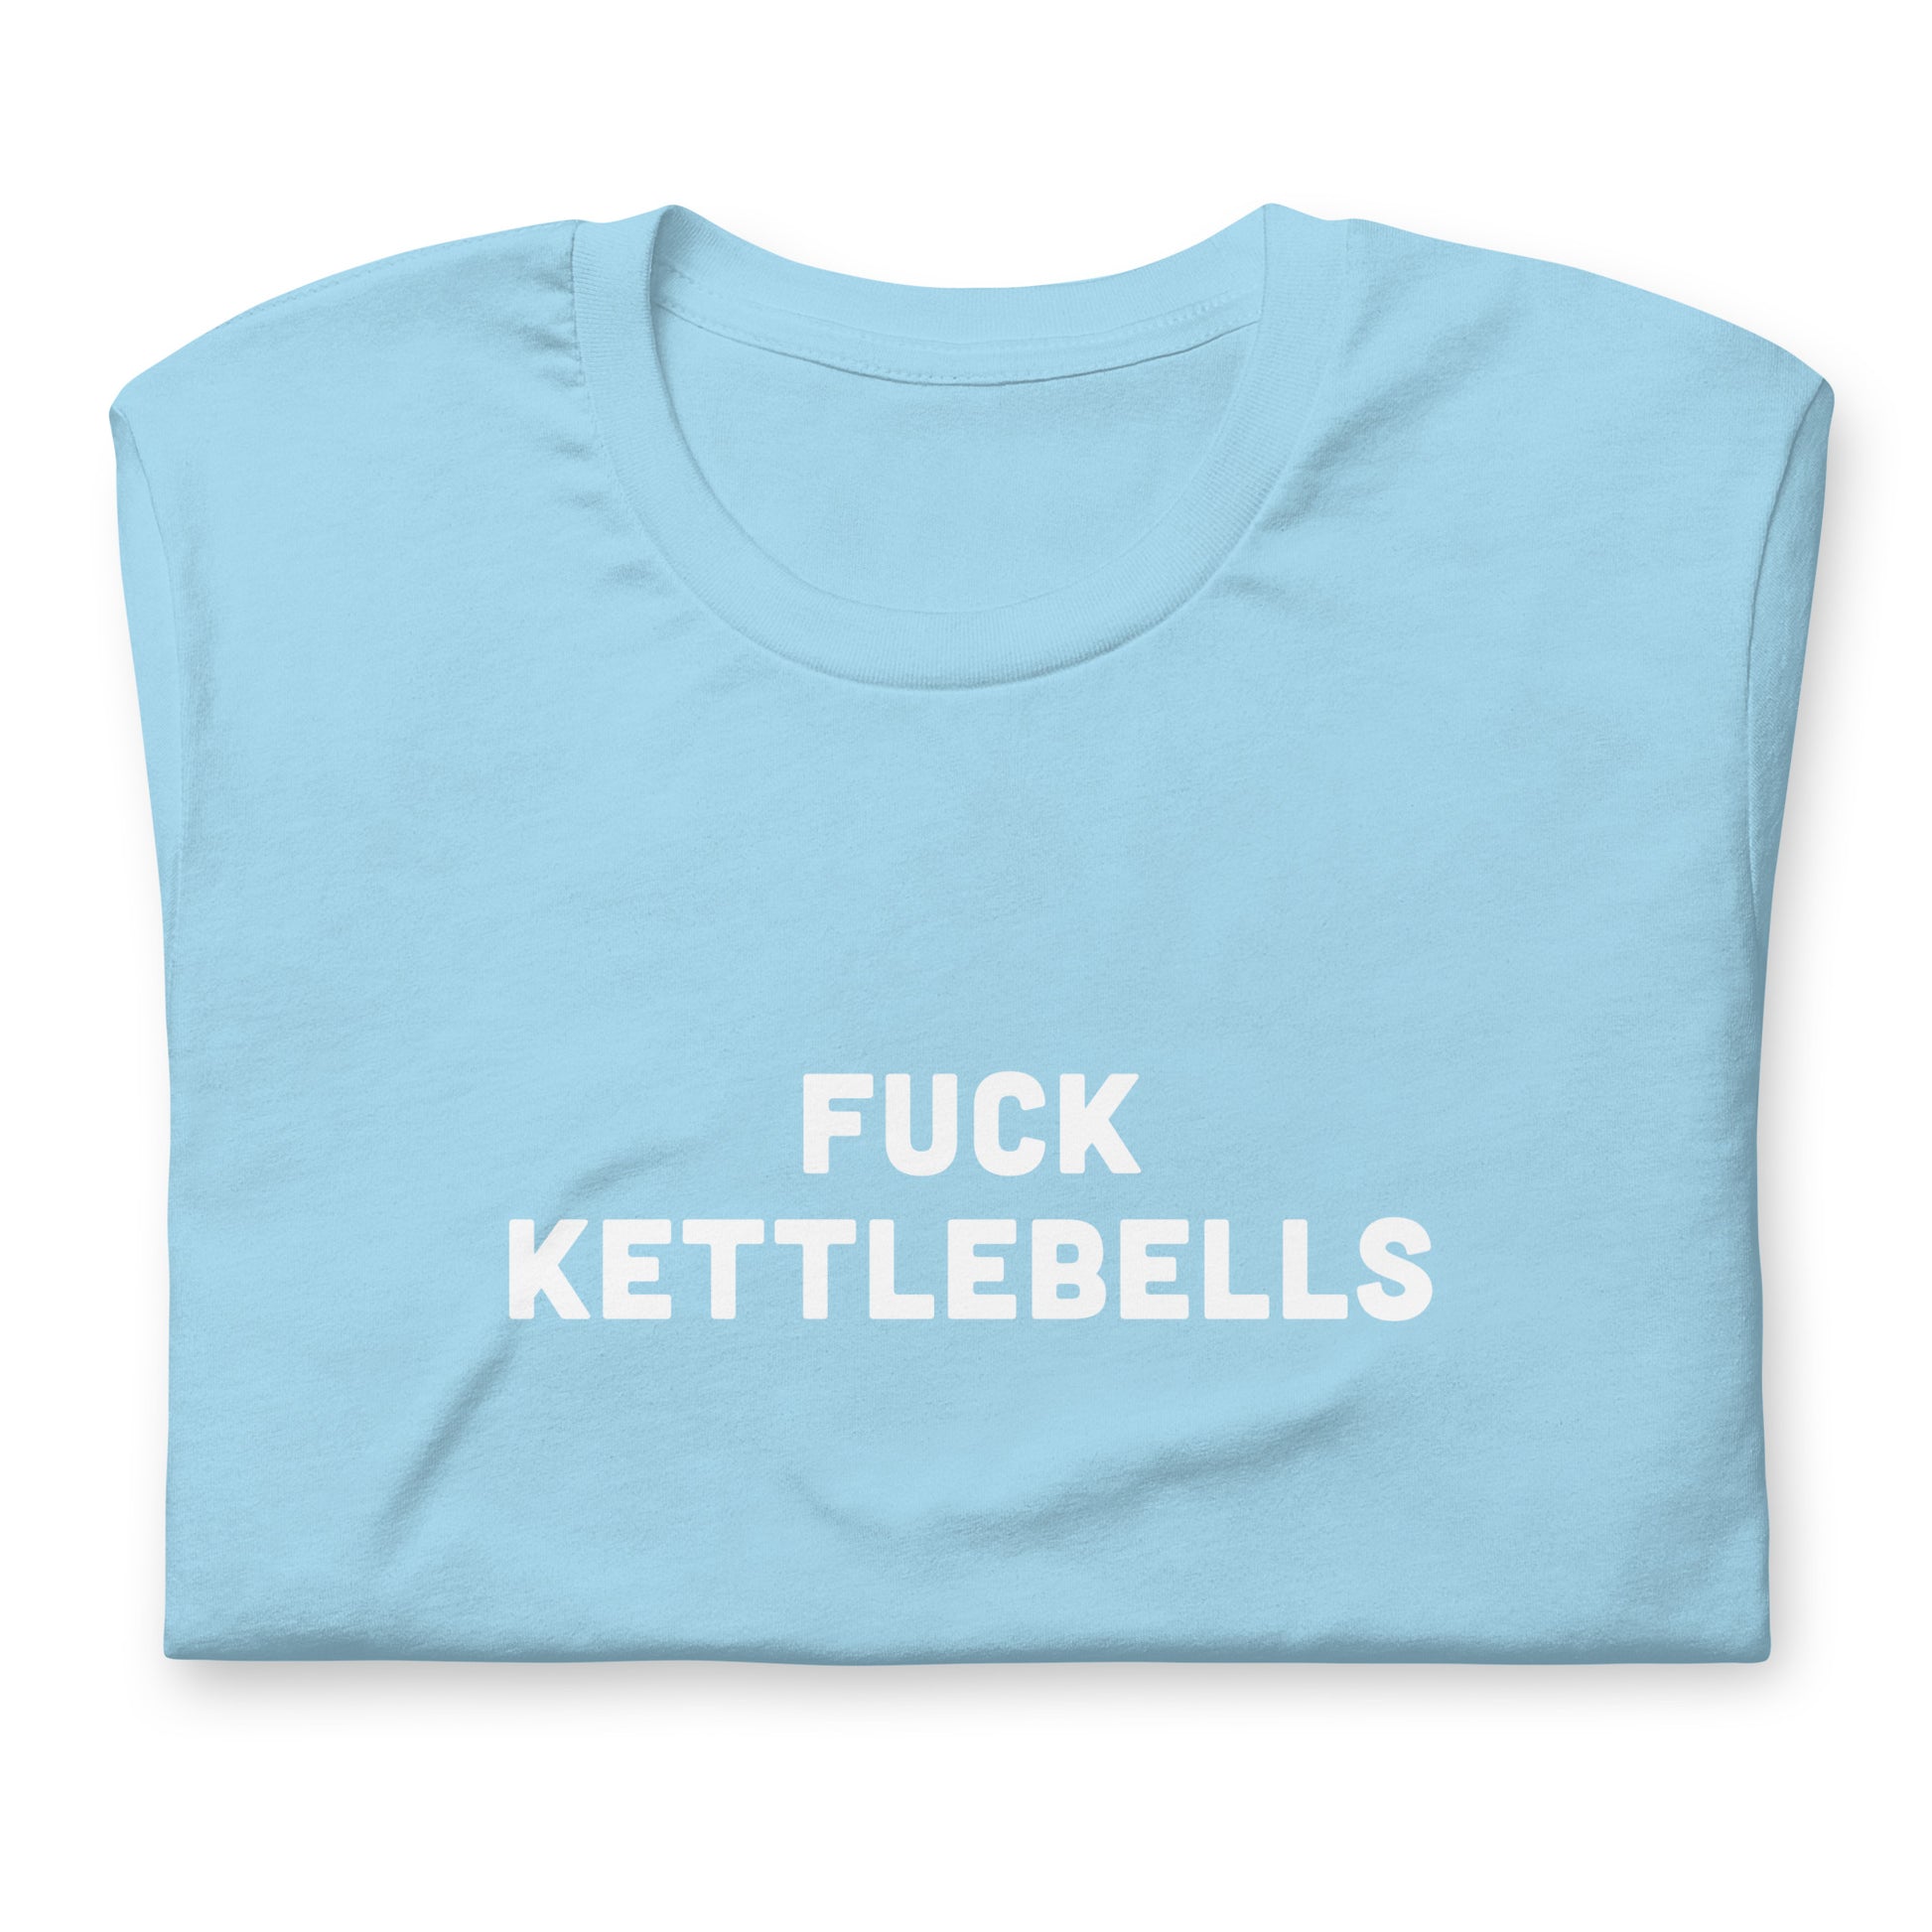 Fuck Kettlebells T-Shirt Size M Color Asphalt